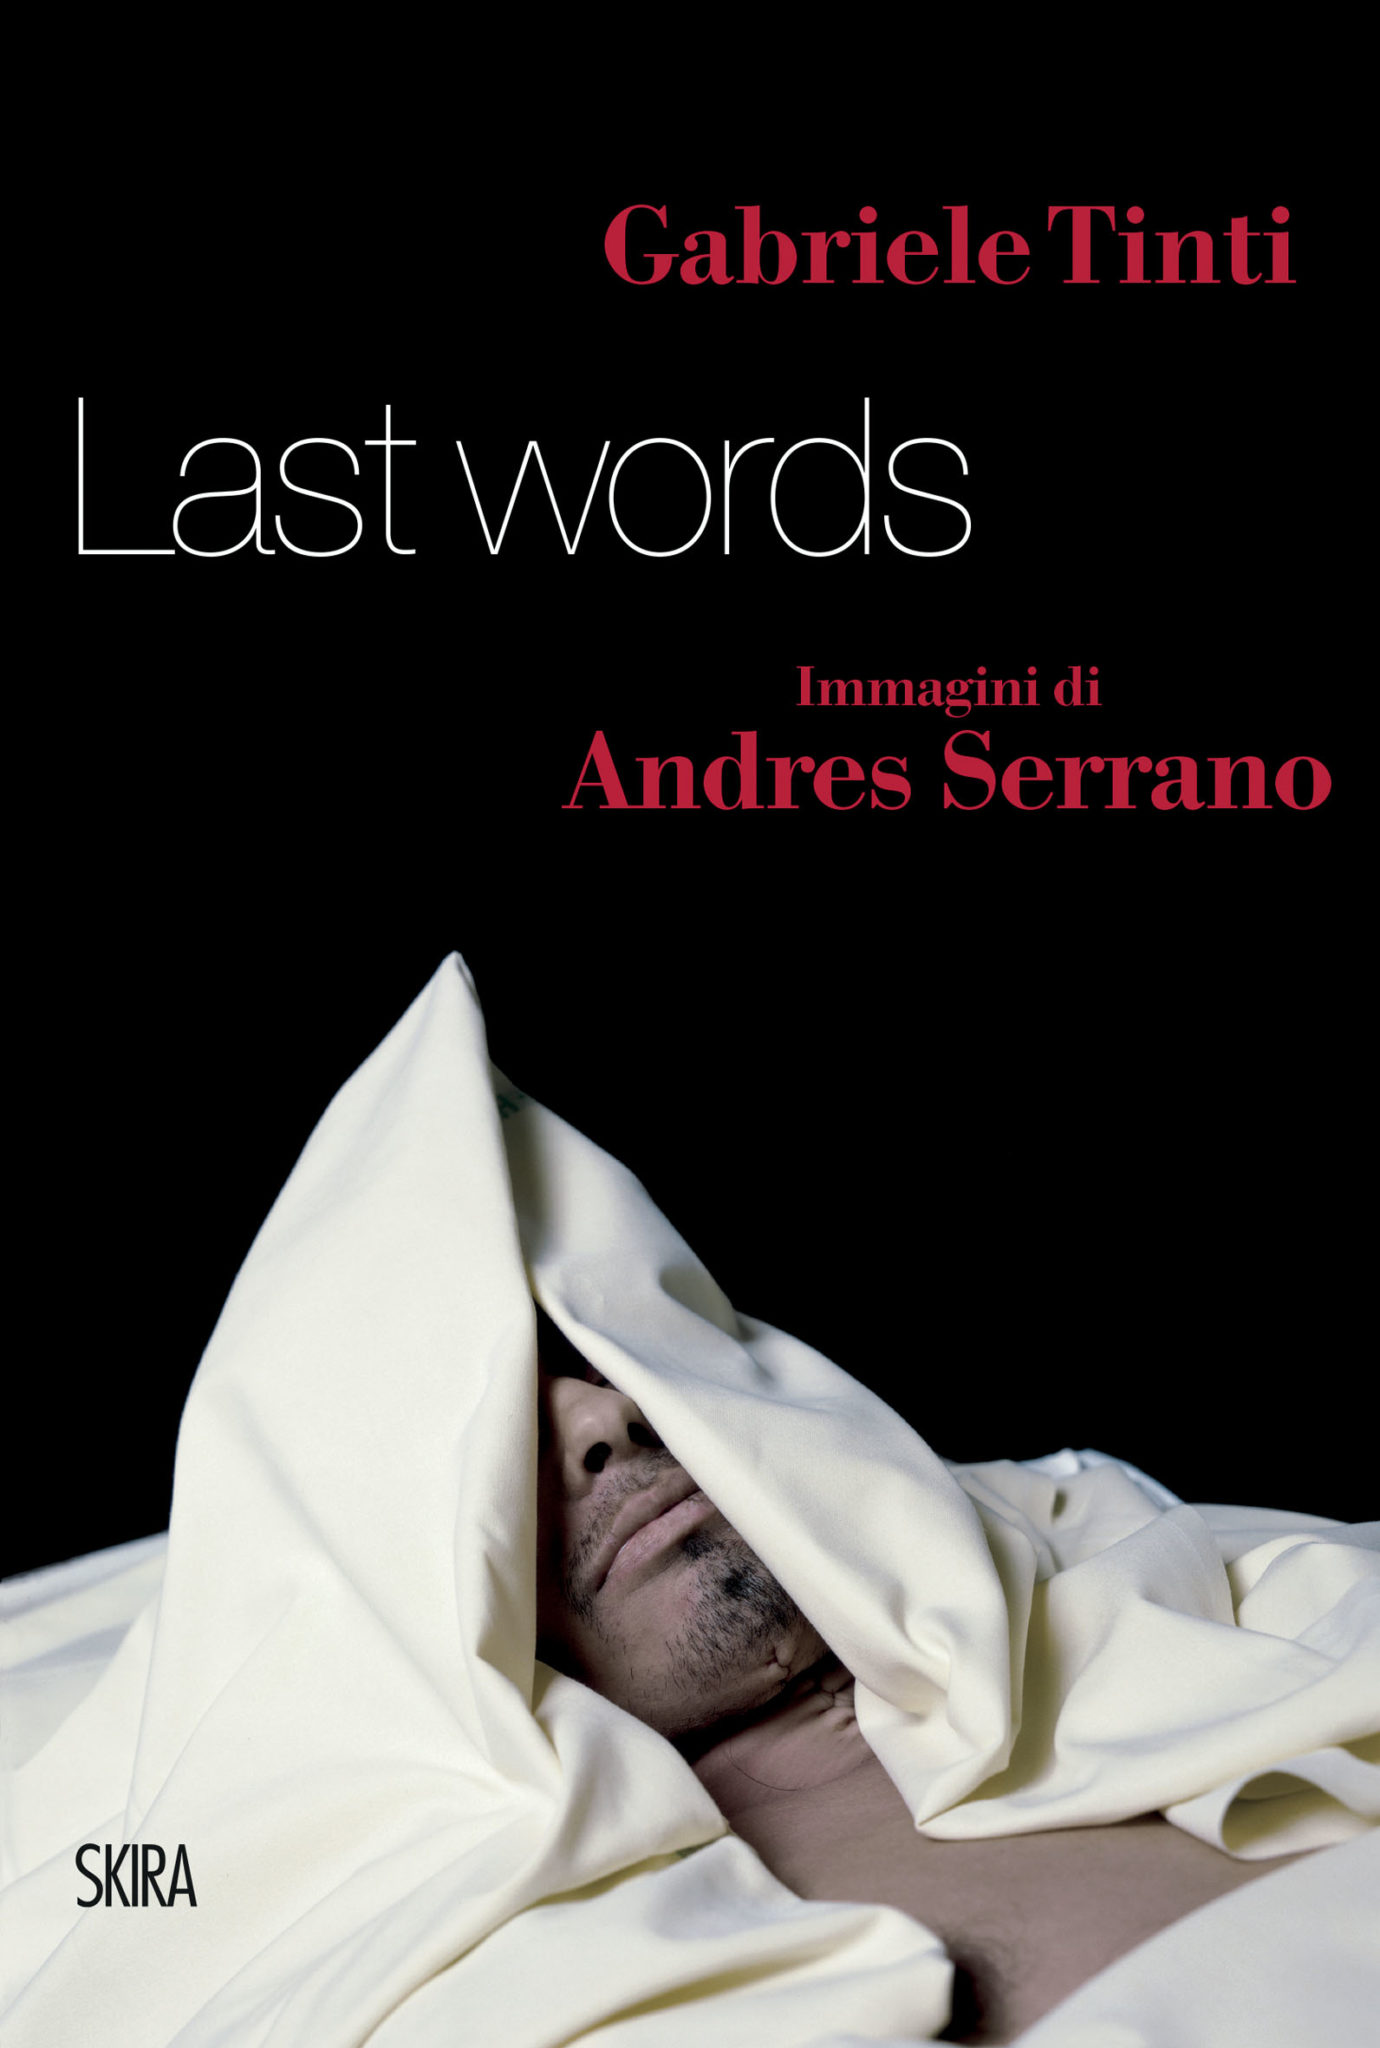 Presentazione volume Last Word di Gabriele Tinti a Roma